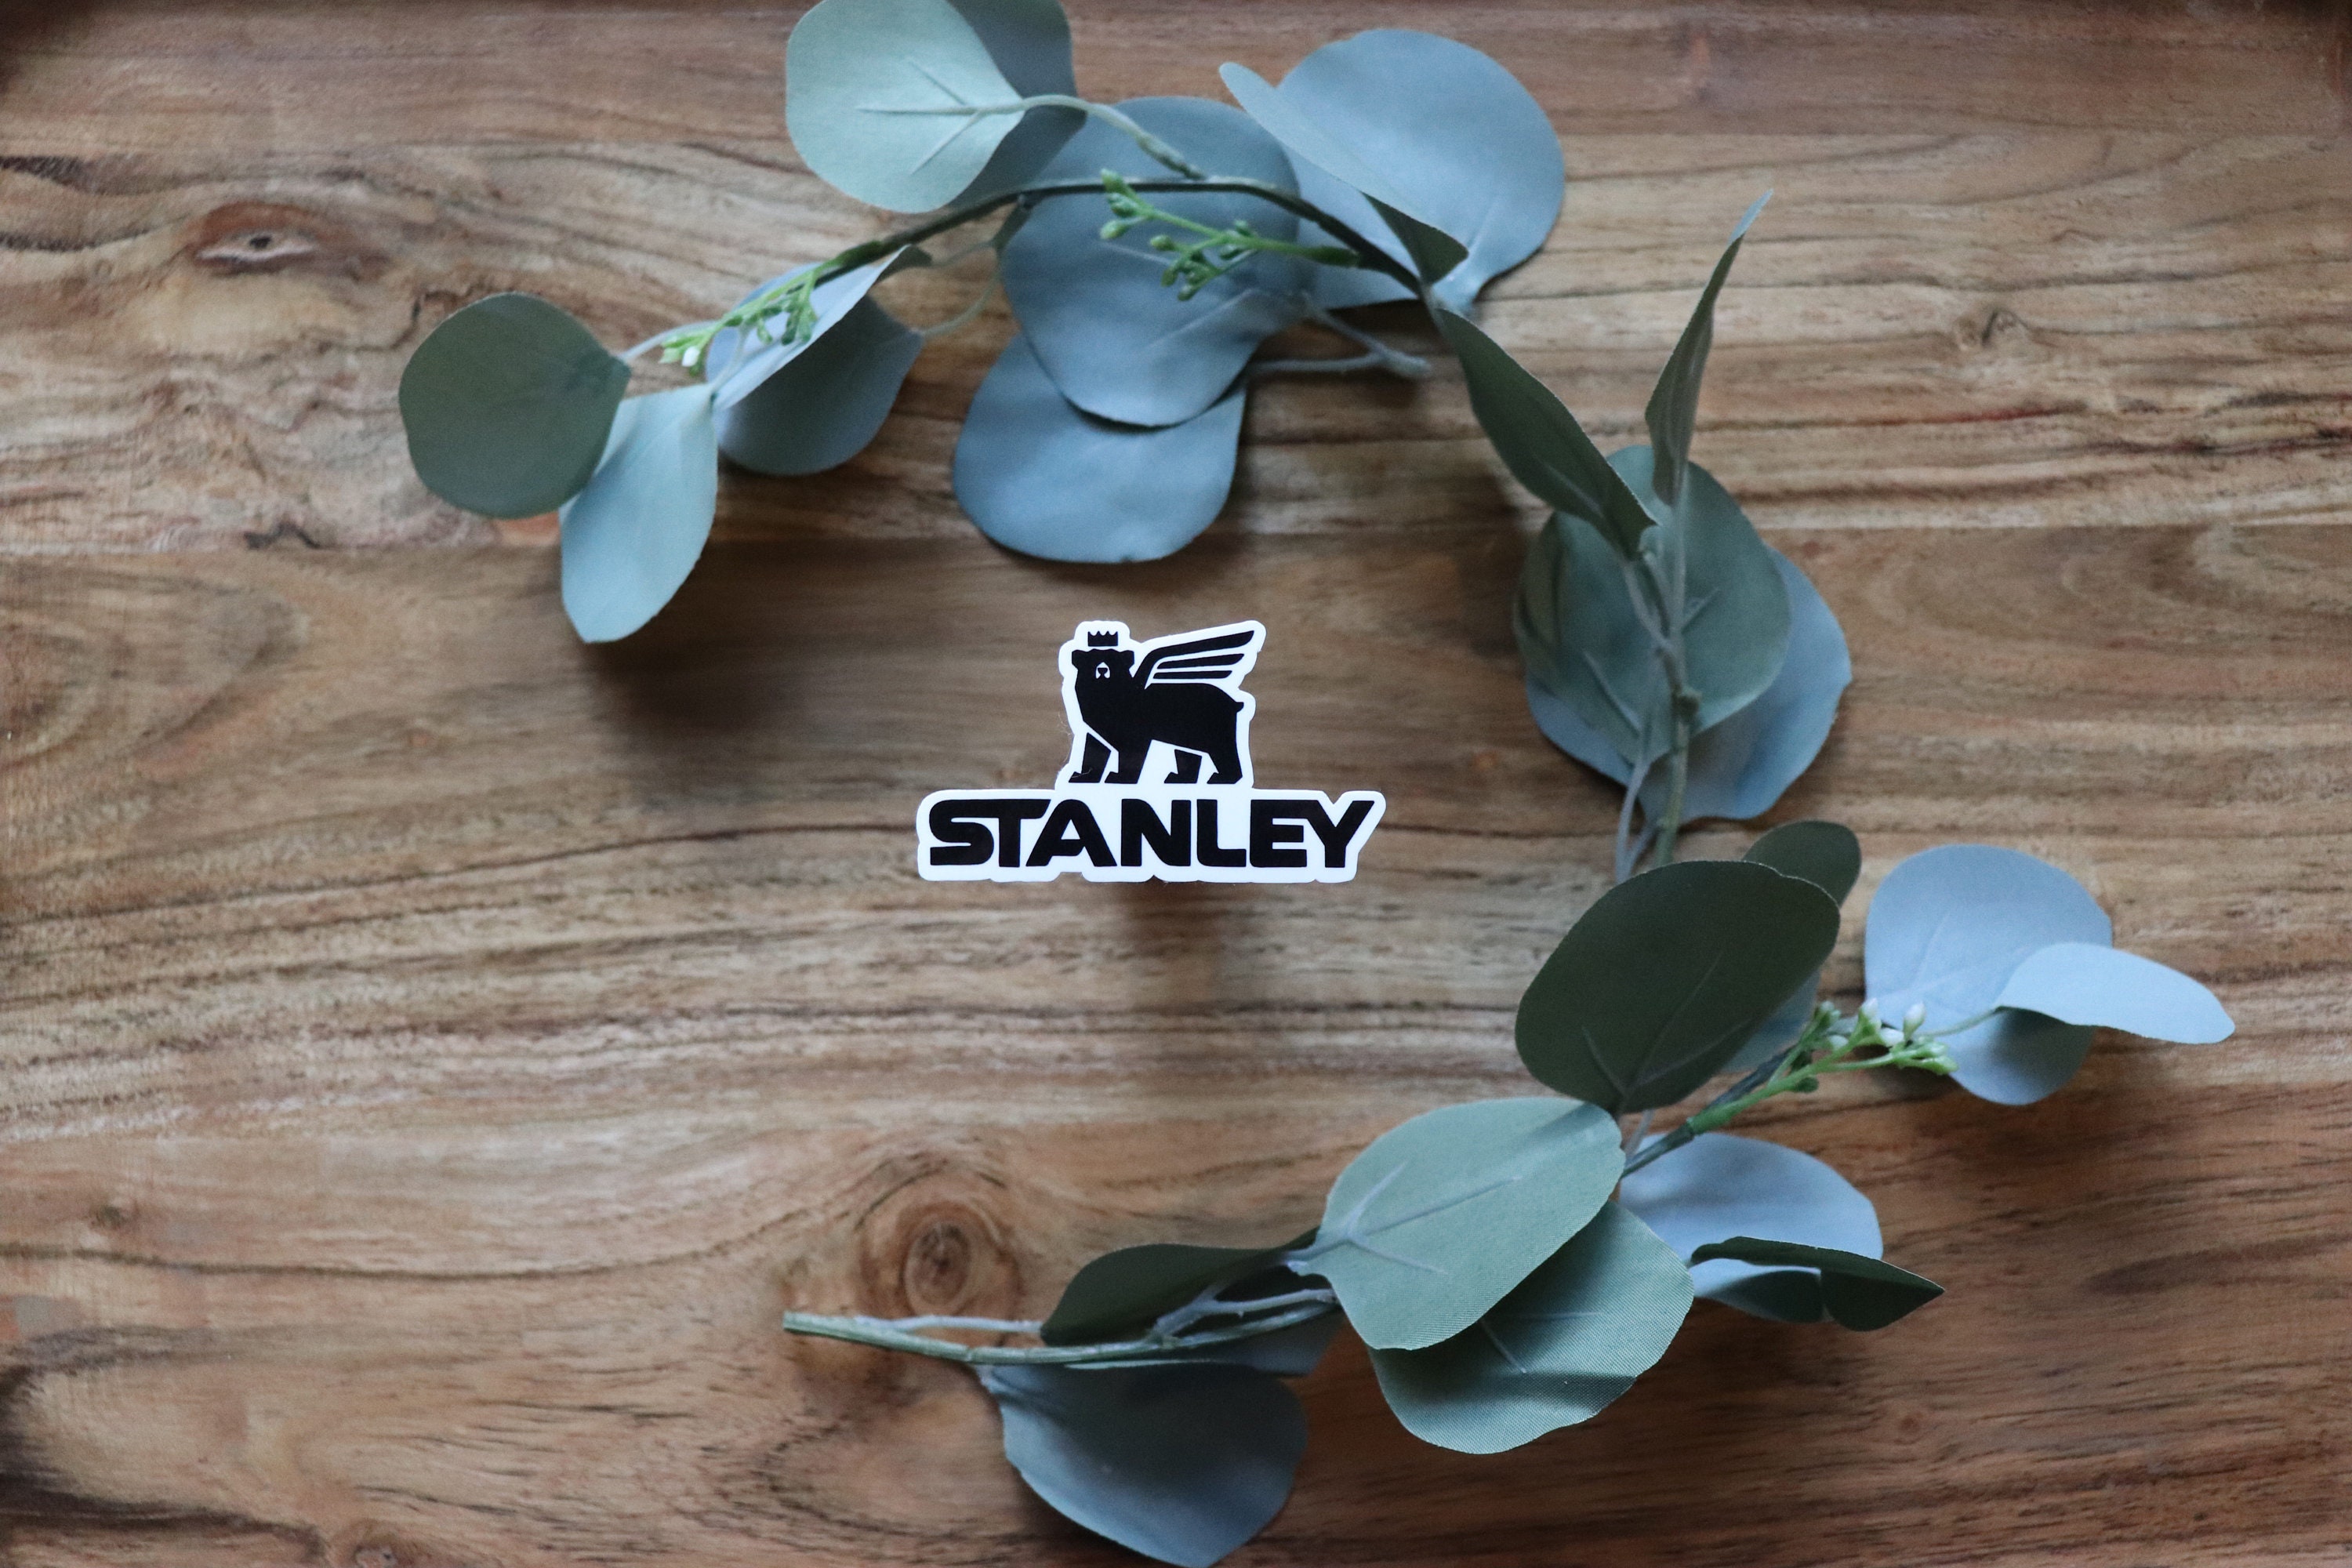 Smelly Stanley Logo Black | Sticker